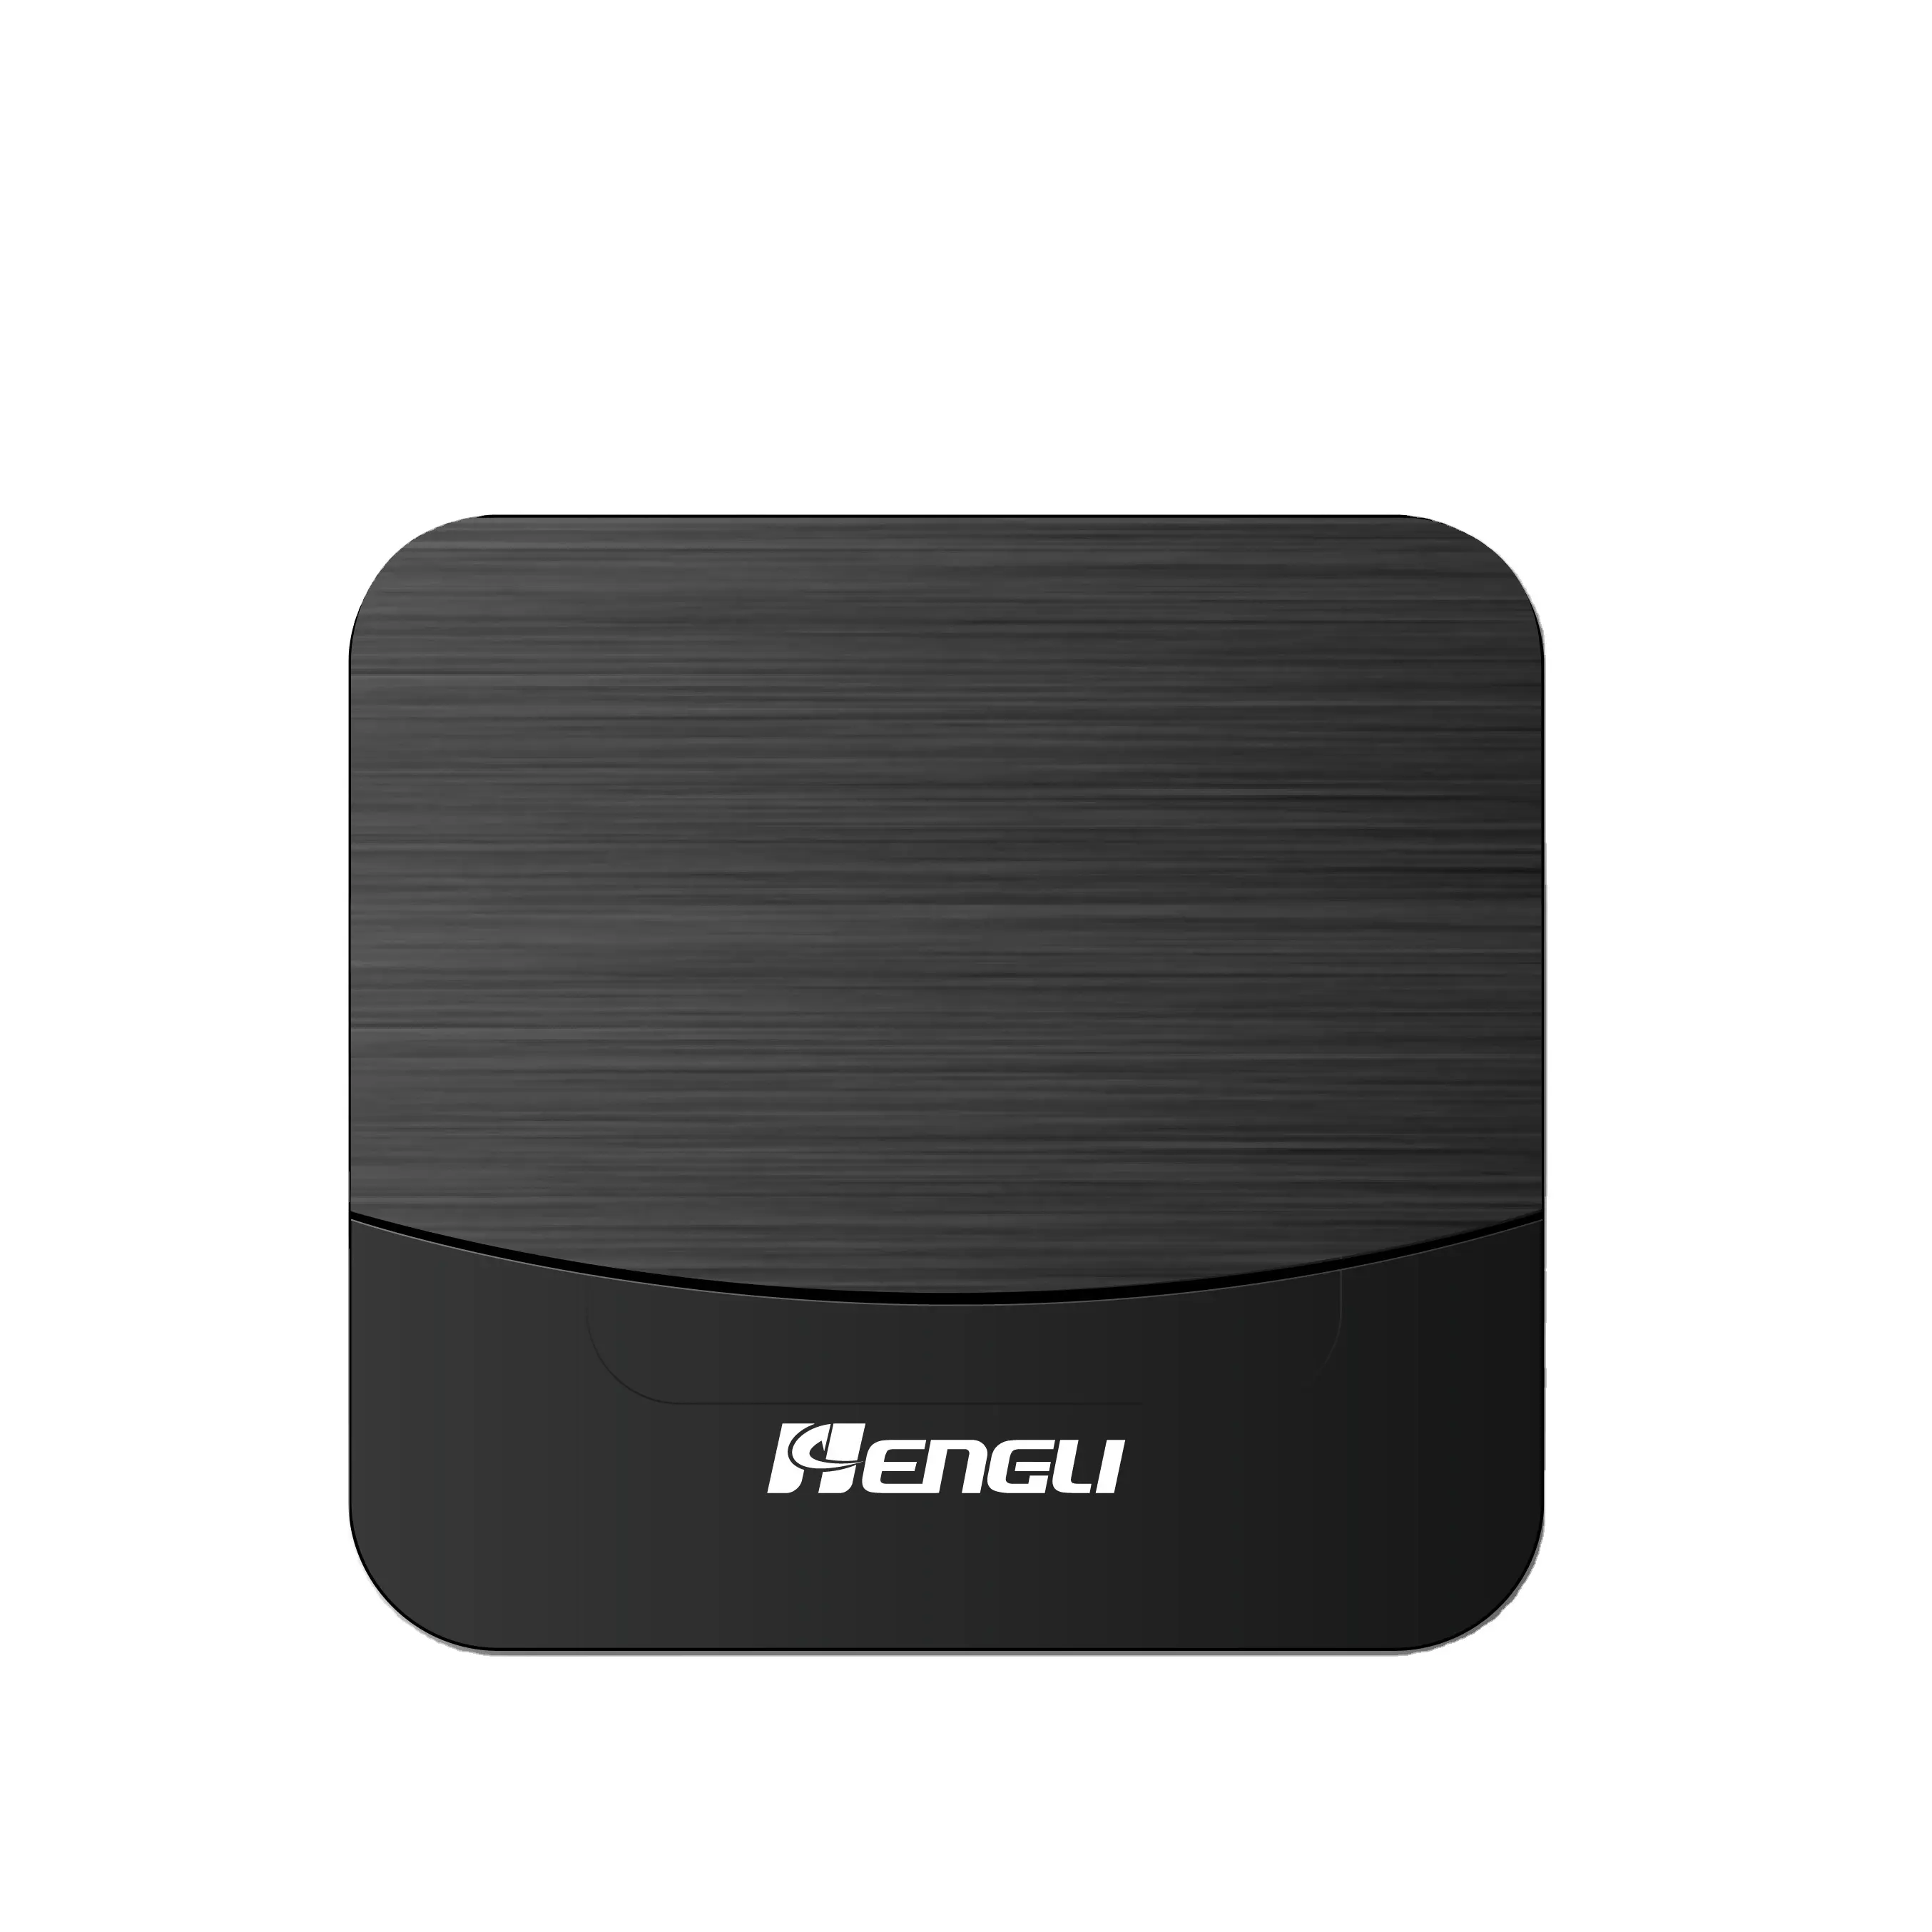 2022 HENGLI Android TV Box H.265/4K Android 9.0 Amlogic S905X3 Smart TV Box